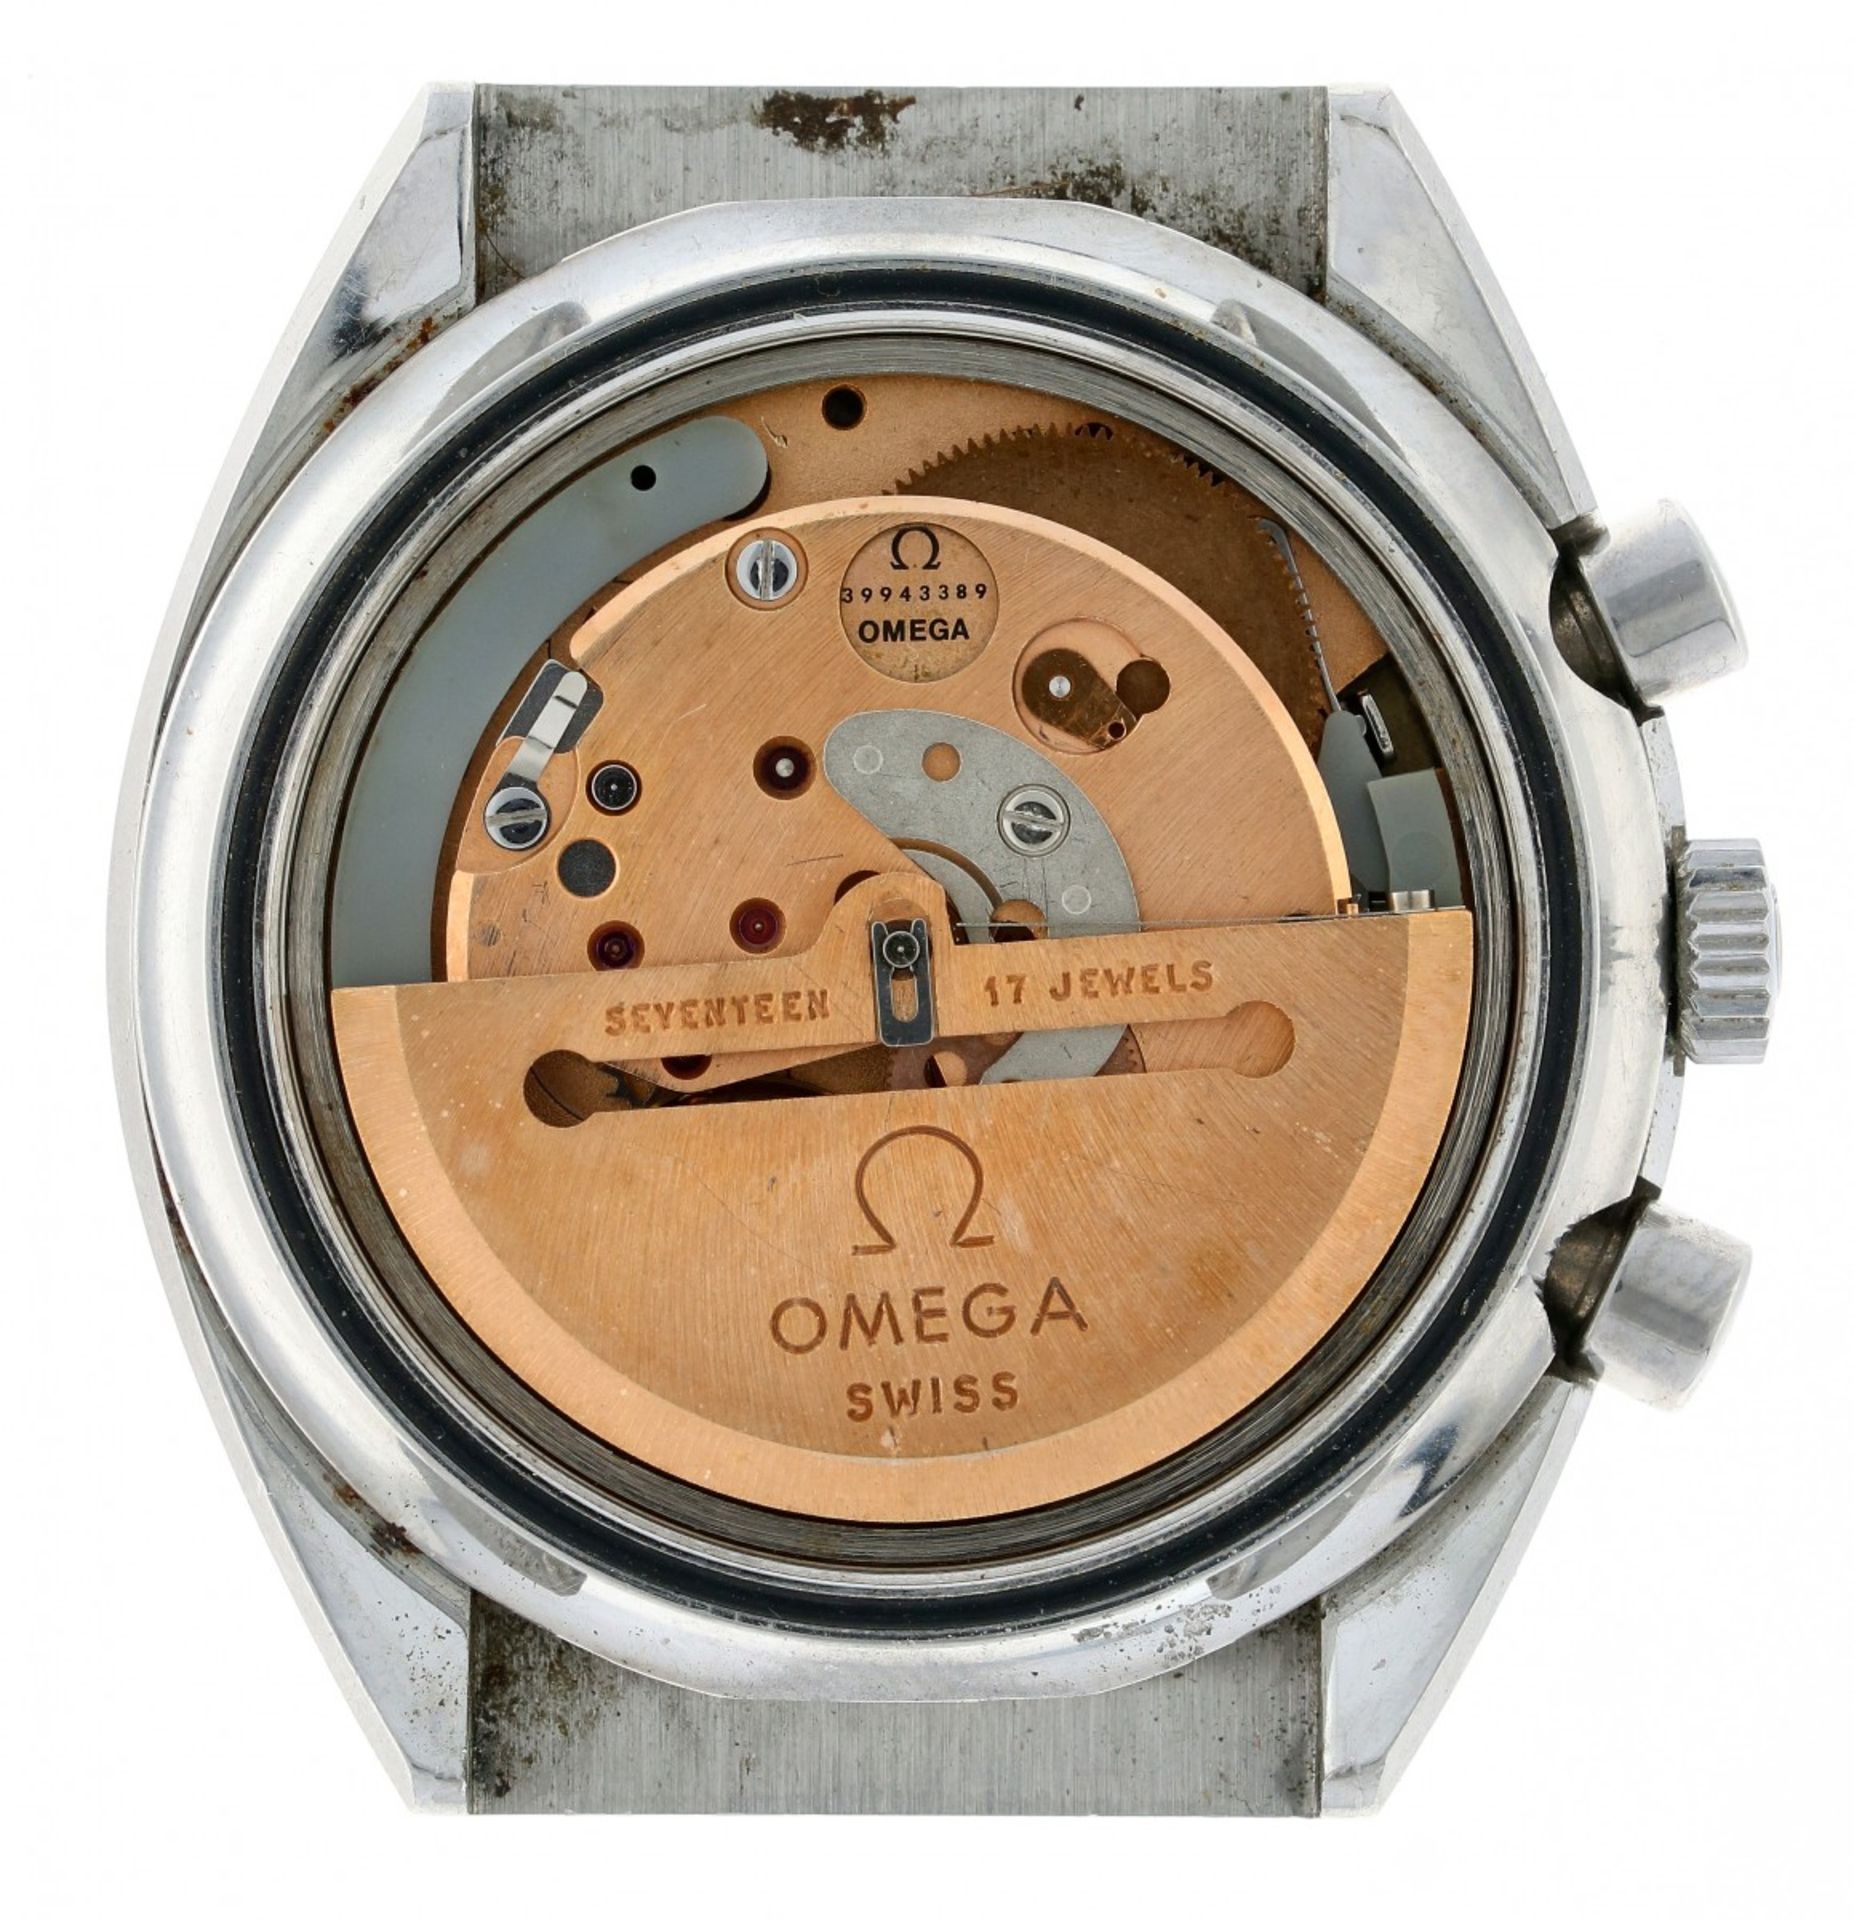 Omega Speedmaster mark 4.5 176.0012 - Men's watch - Approx. 1975. - Image 6 of 8